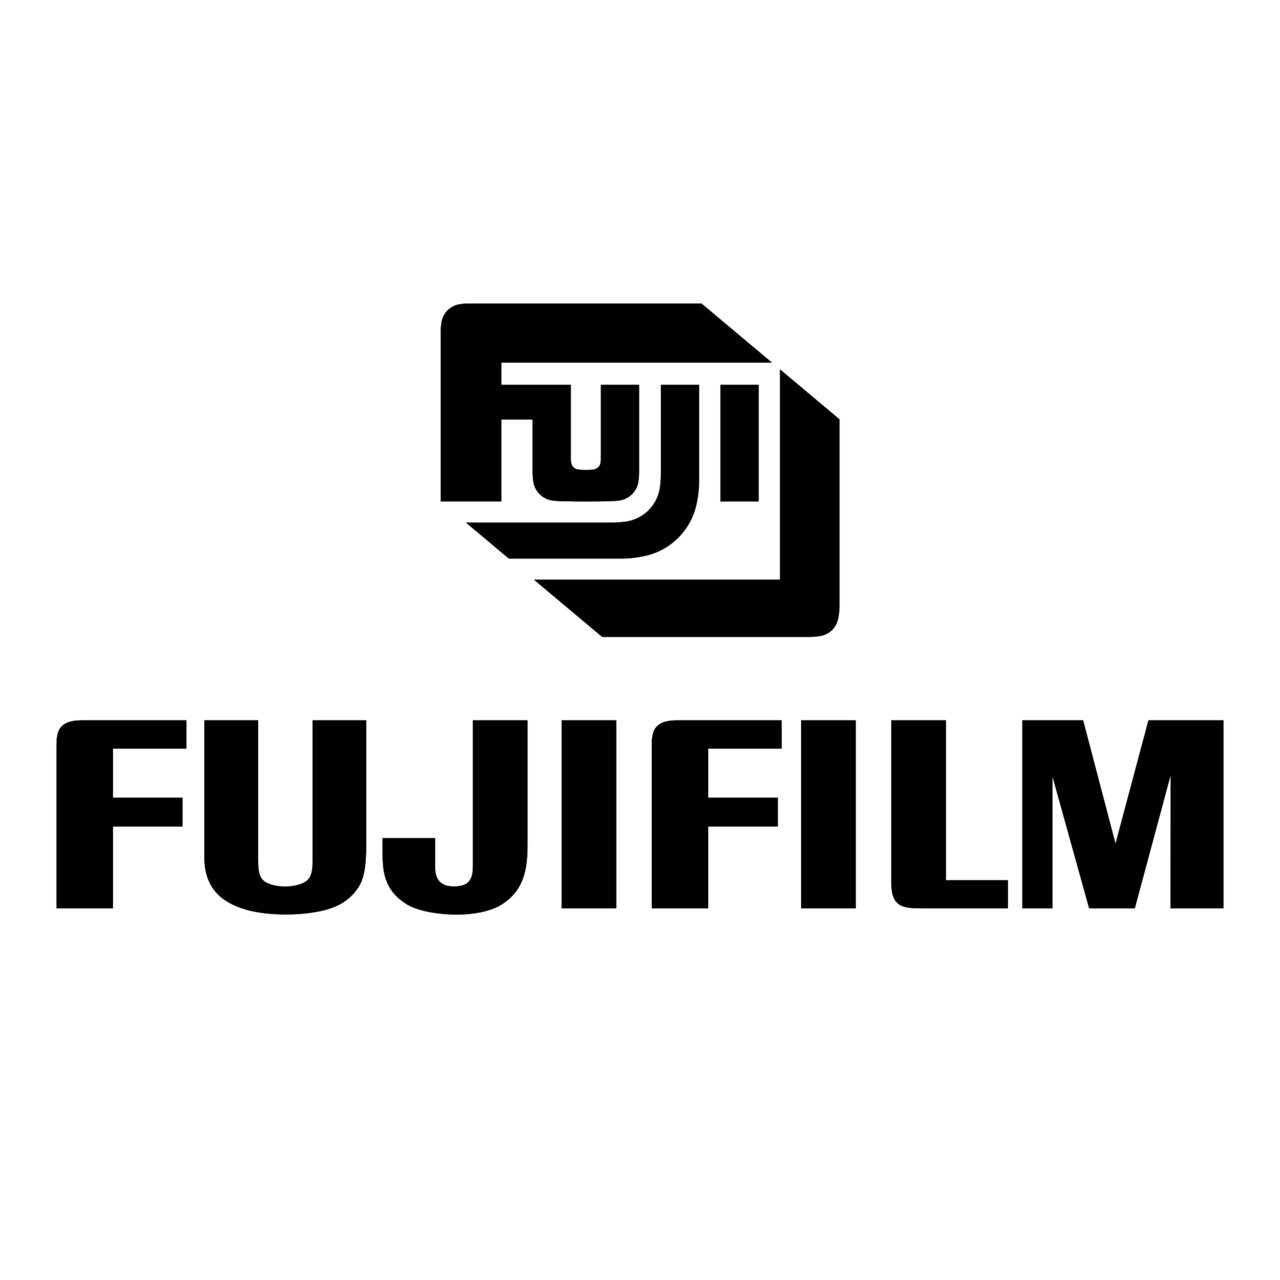 fujifilm-logo-black-and-white-3.jpg